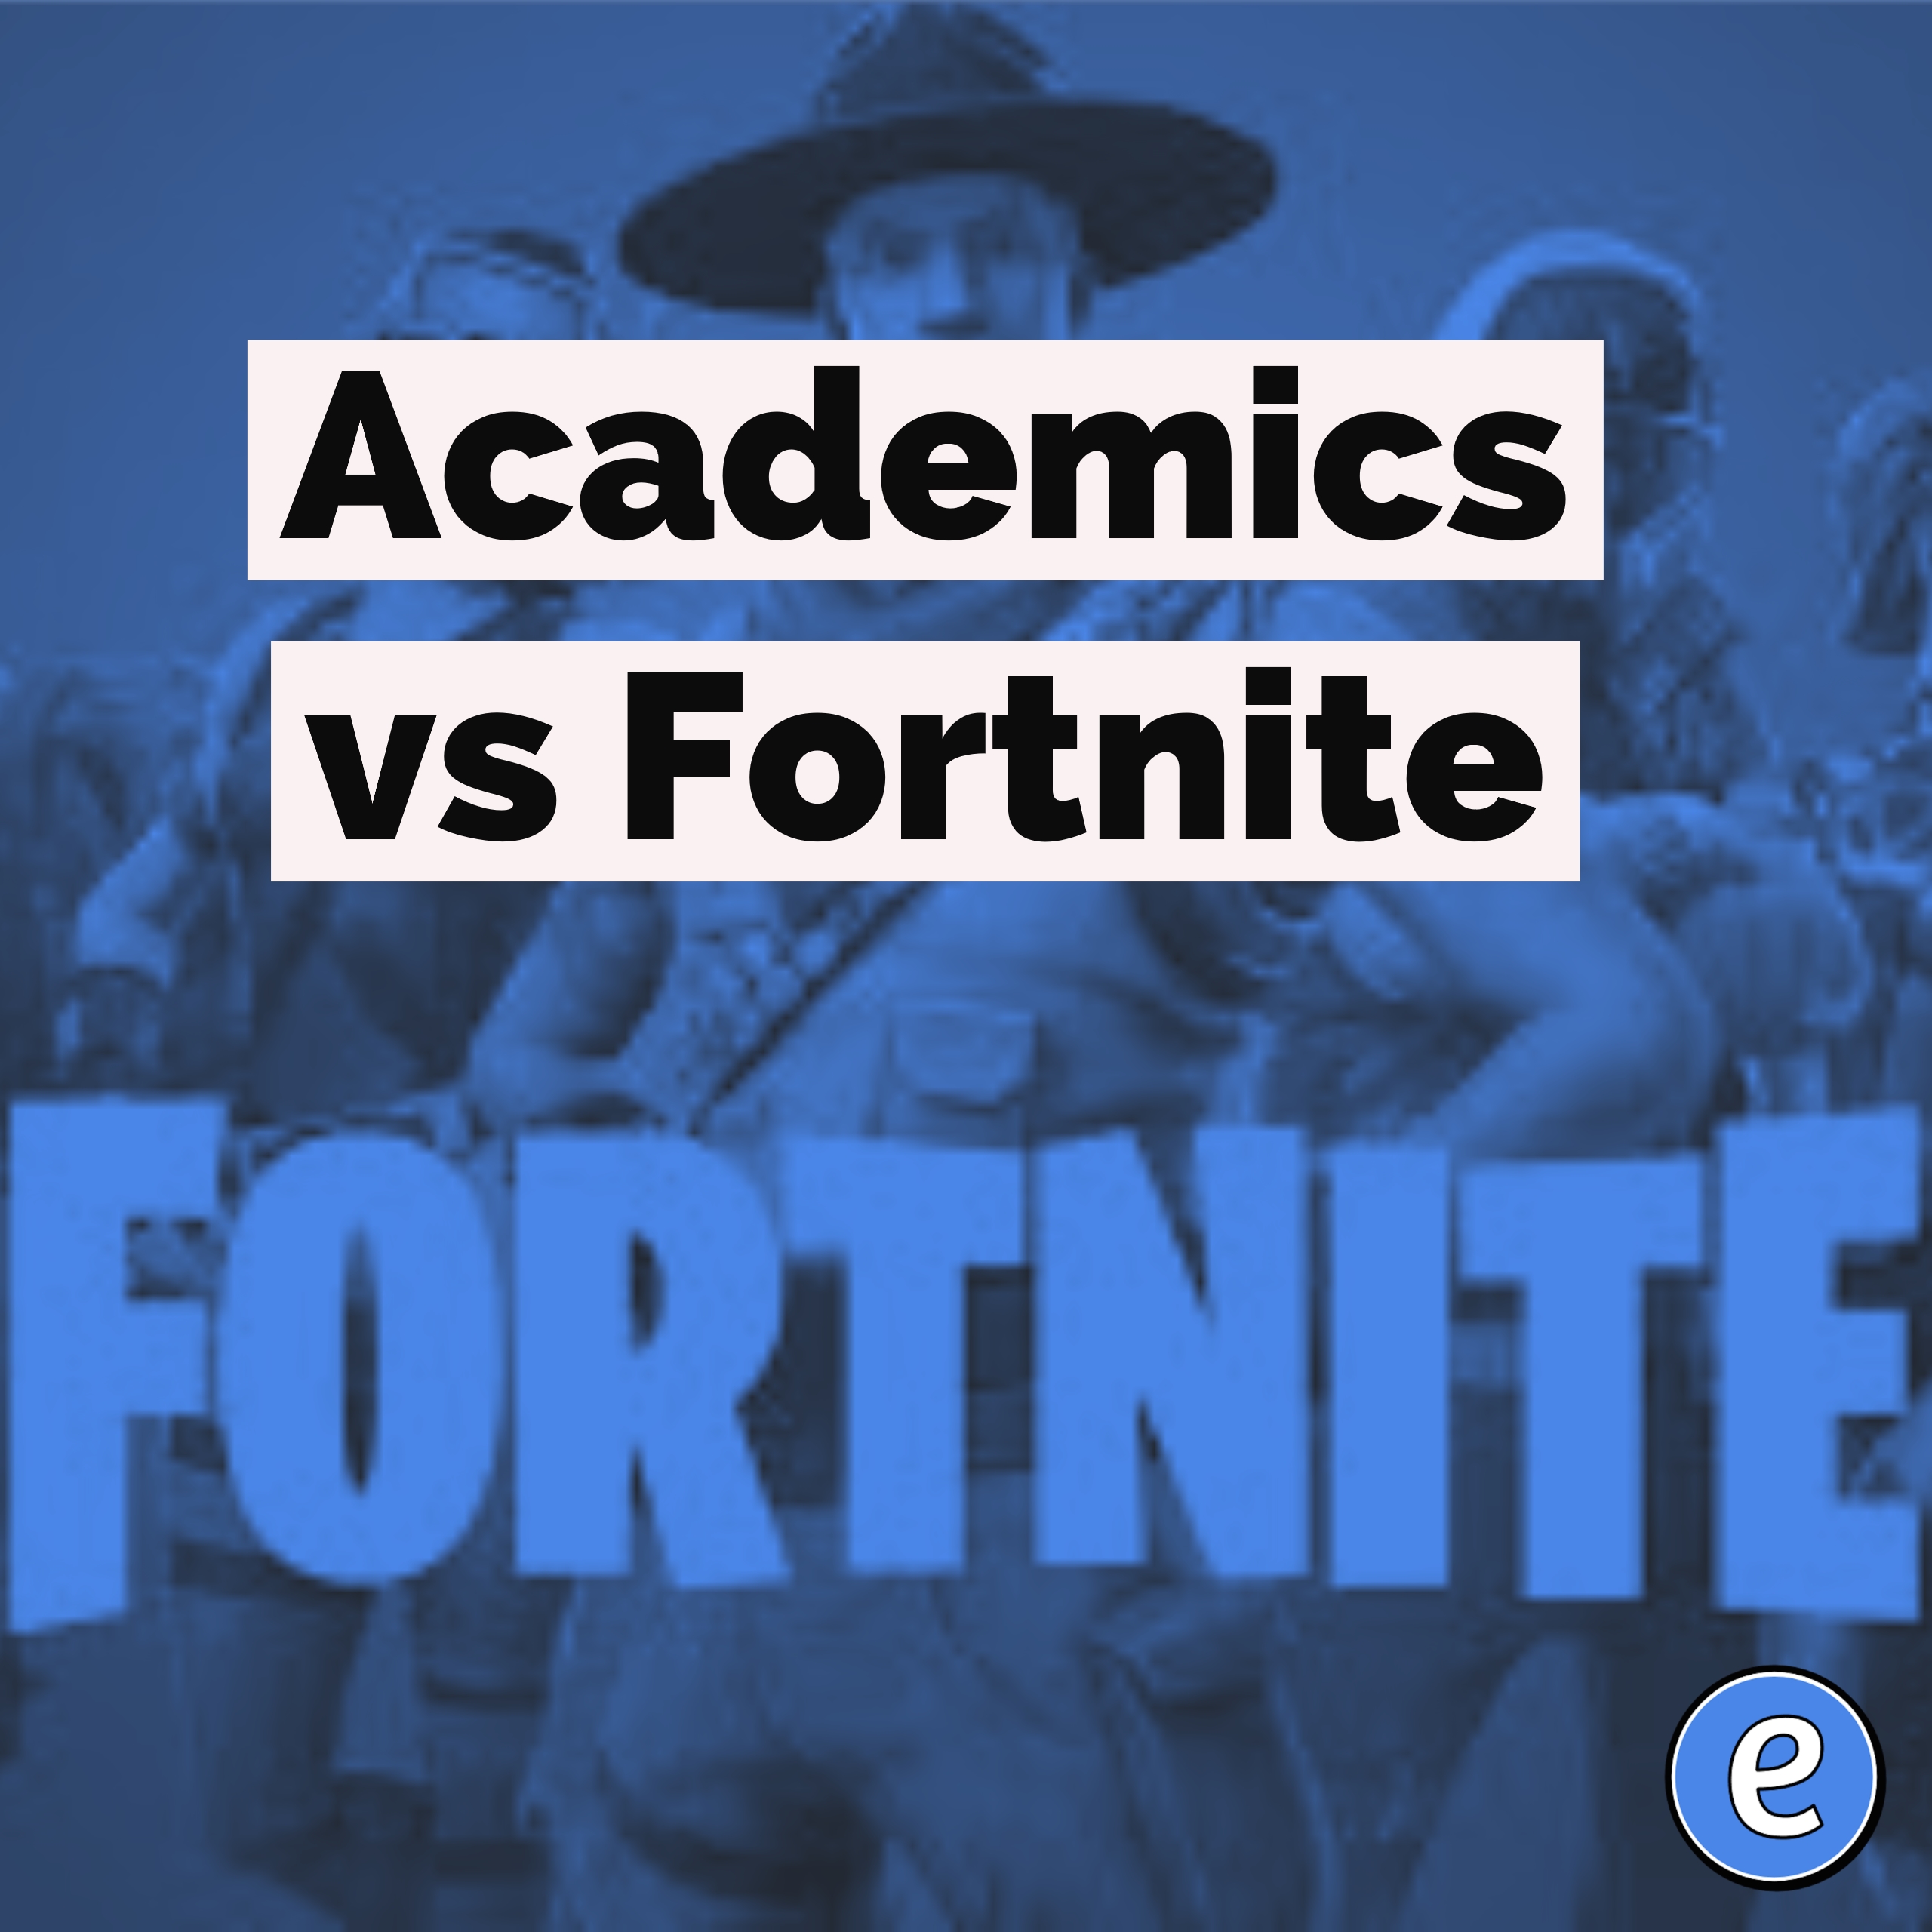 Academics vs Fortnite